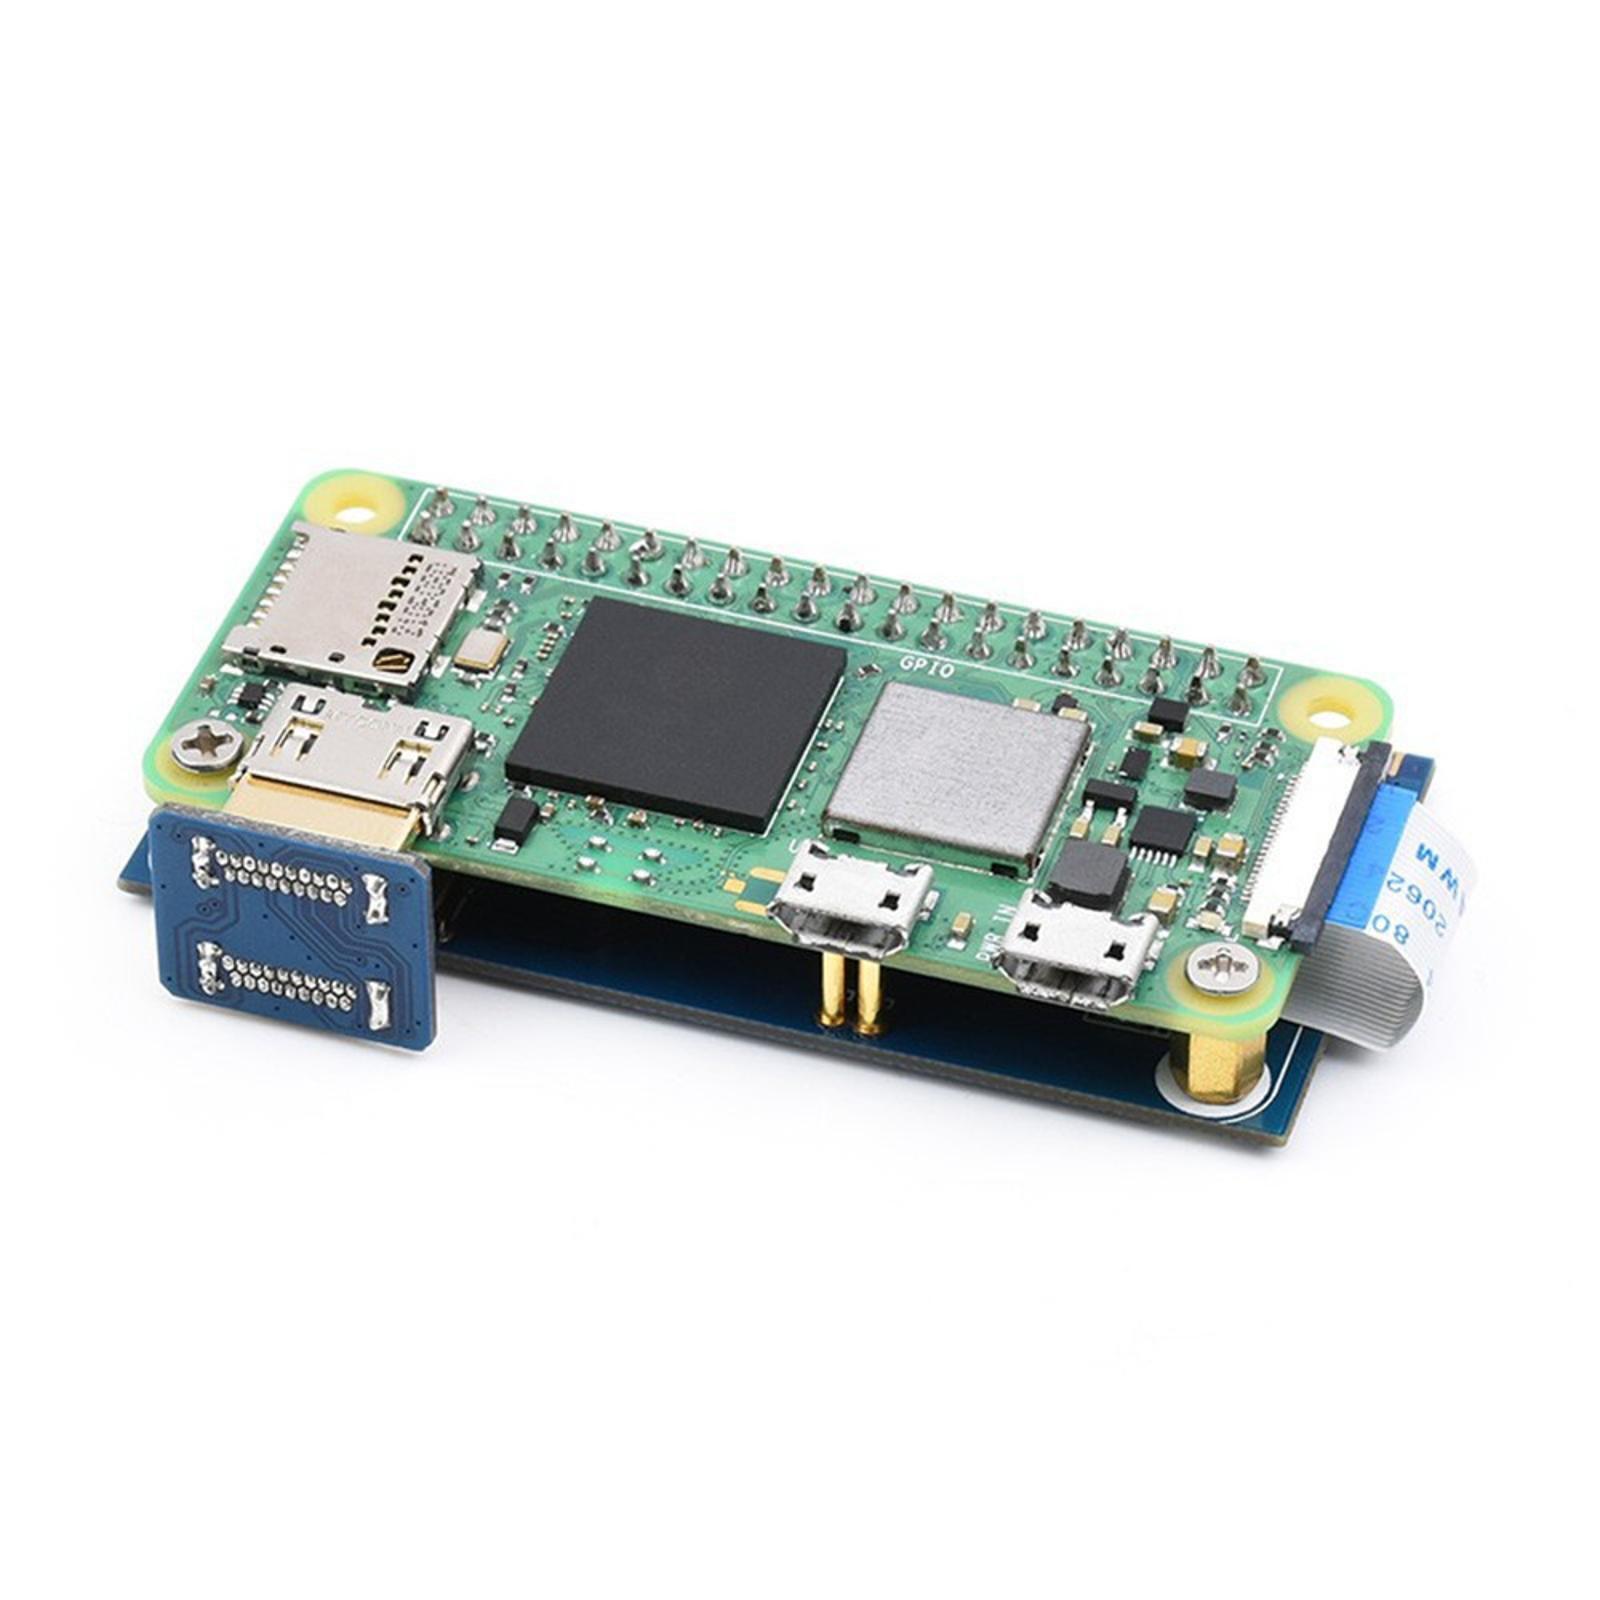 New Alternative Solution Adapter Board for Raspberry Pi Zero 2W To CM3 CM3+